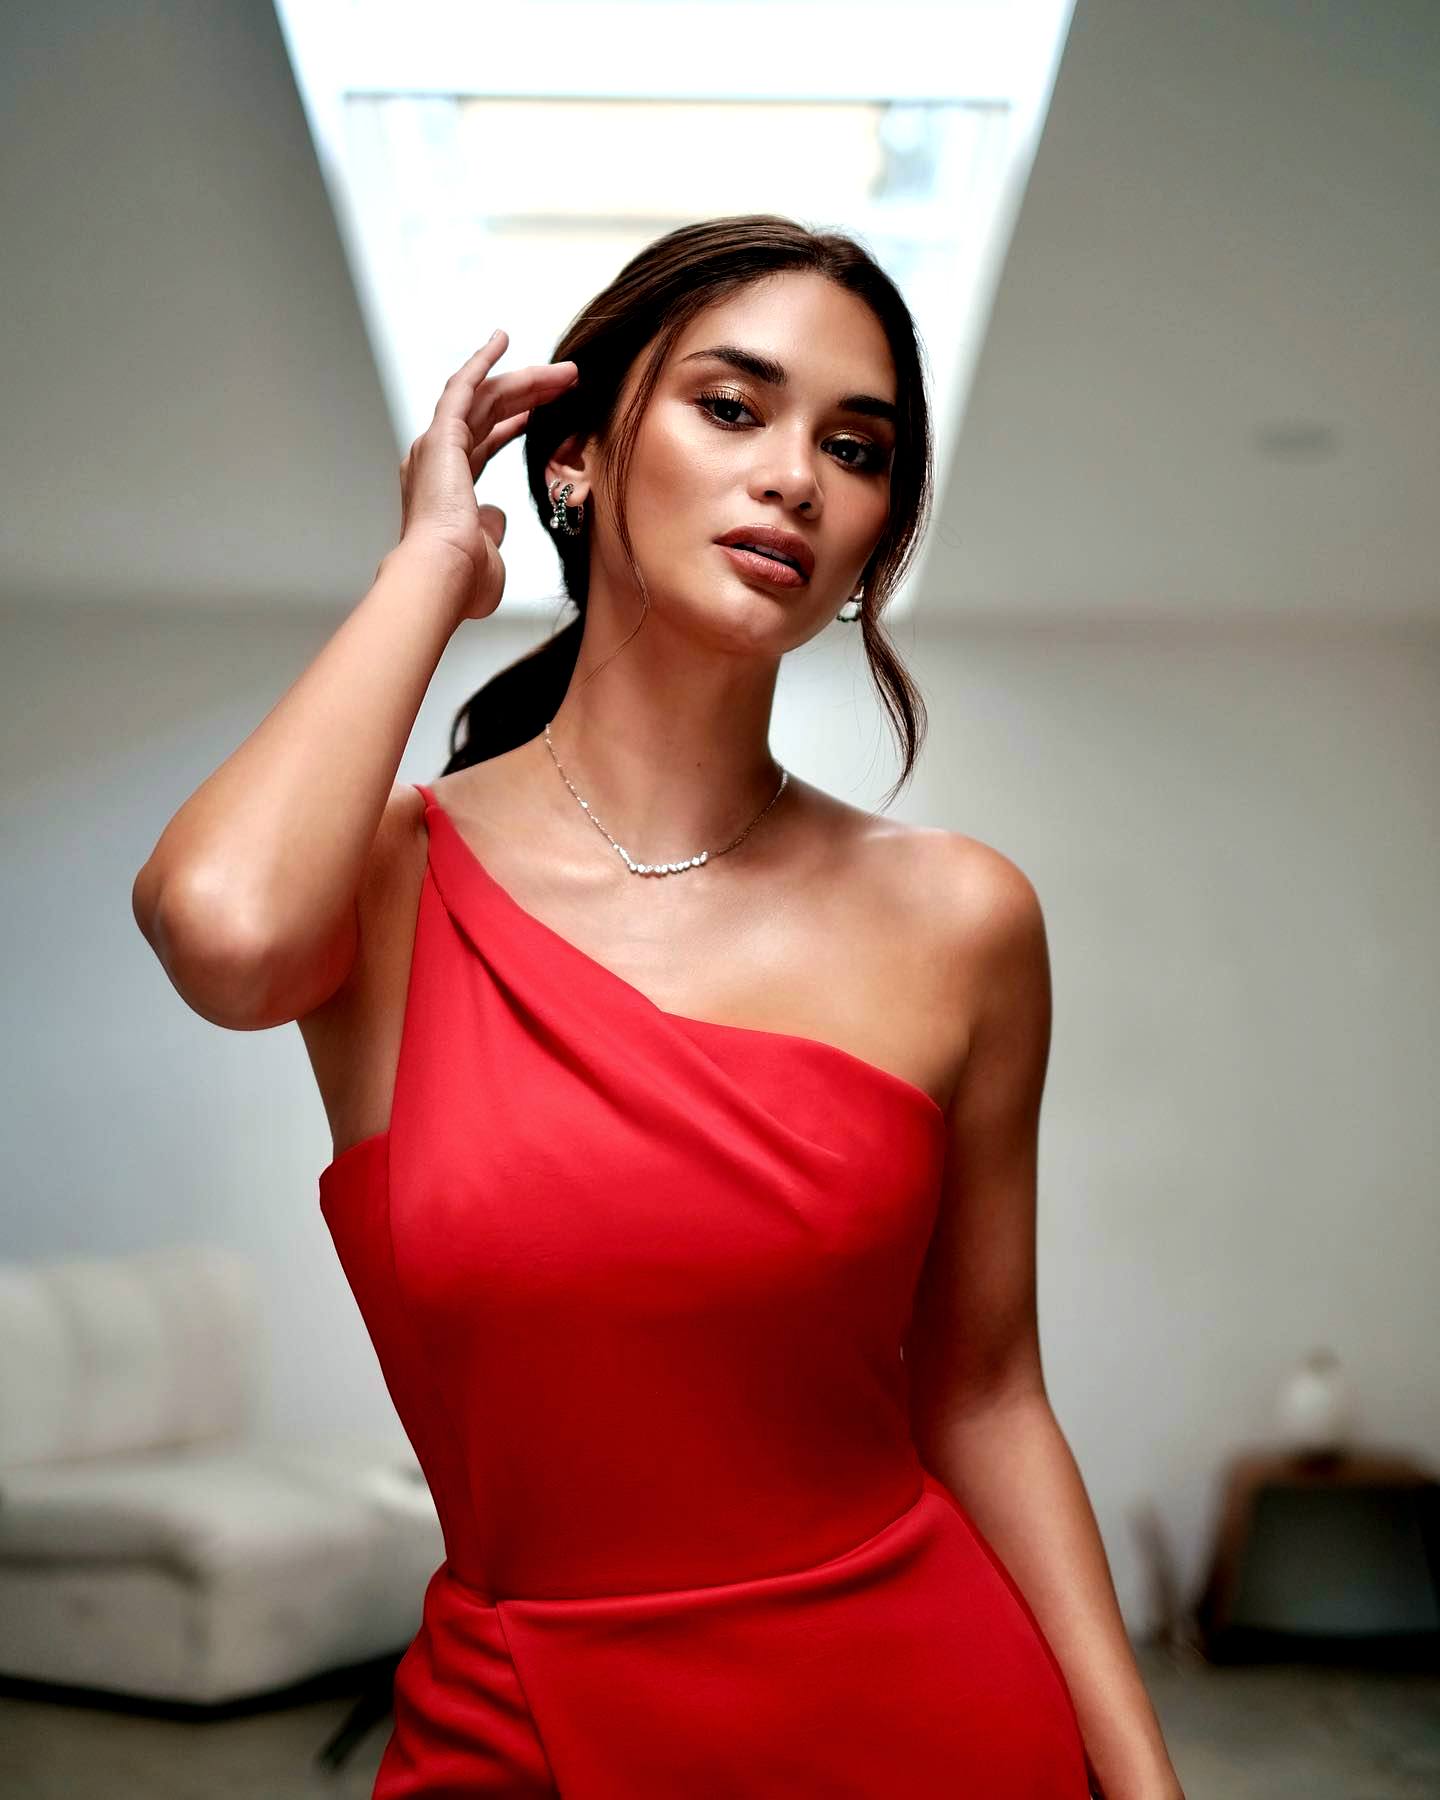 15 Hot Filipino Girls: The Most Beautiful Filipino Women To Reveal